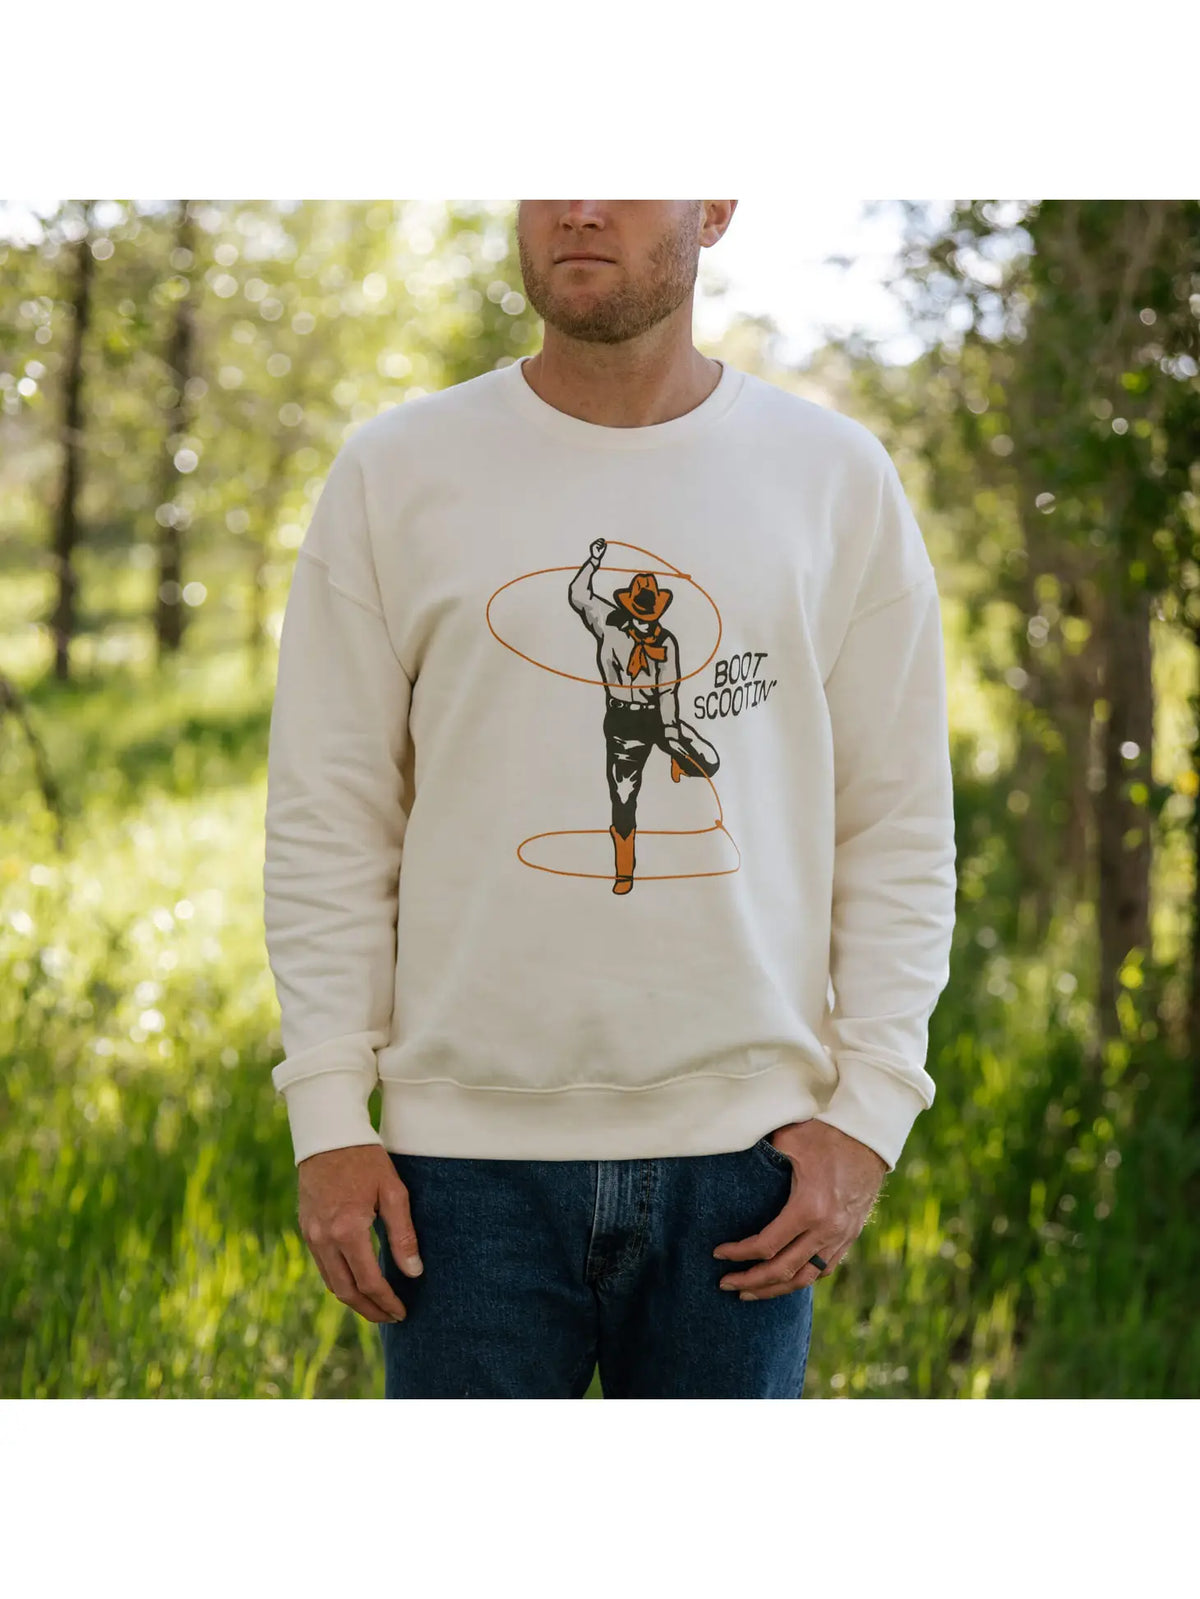 Sendero Provisions Co Boot Scootin’ Cowboy Sweatshirt